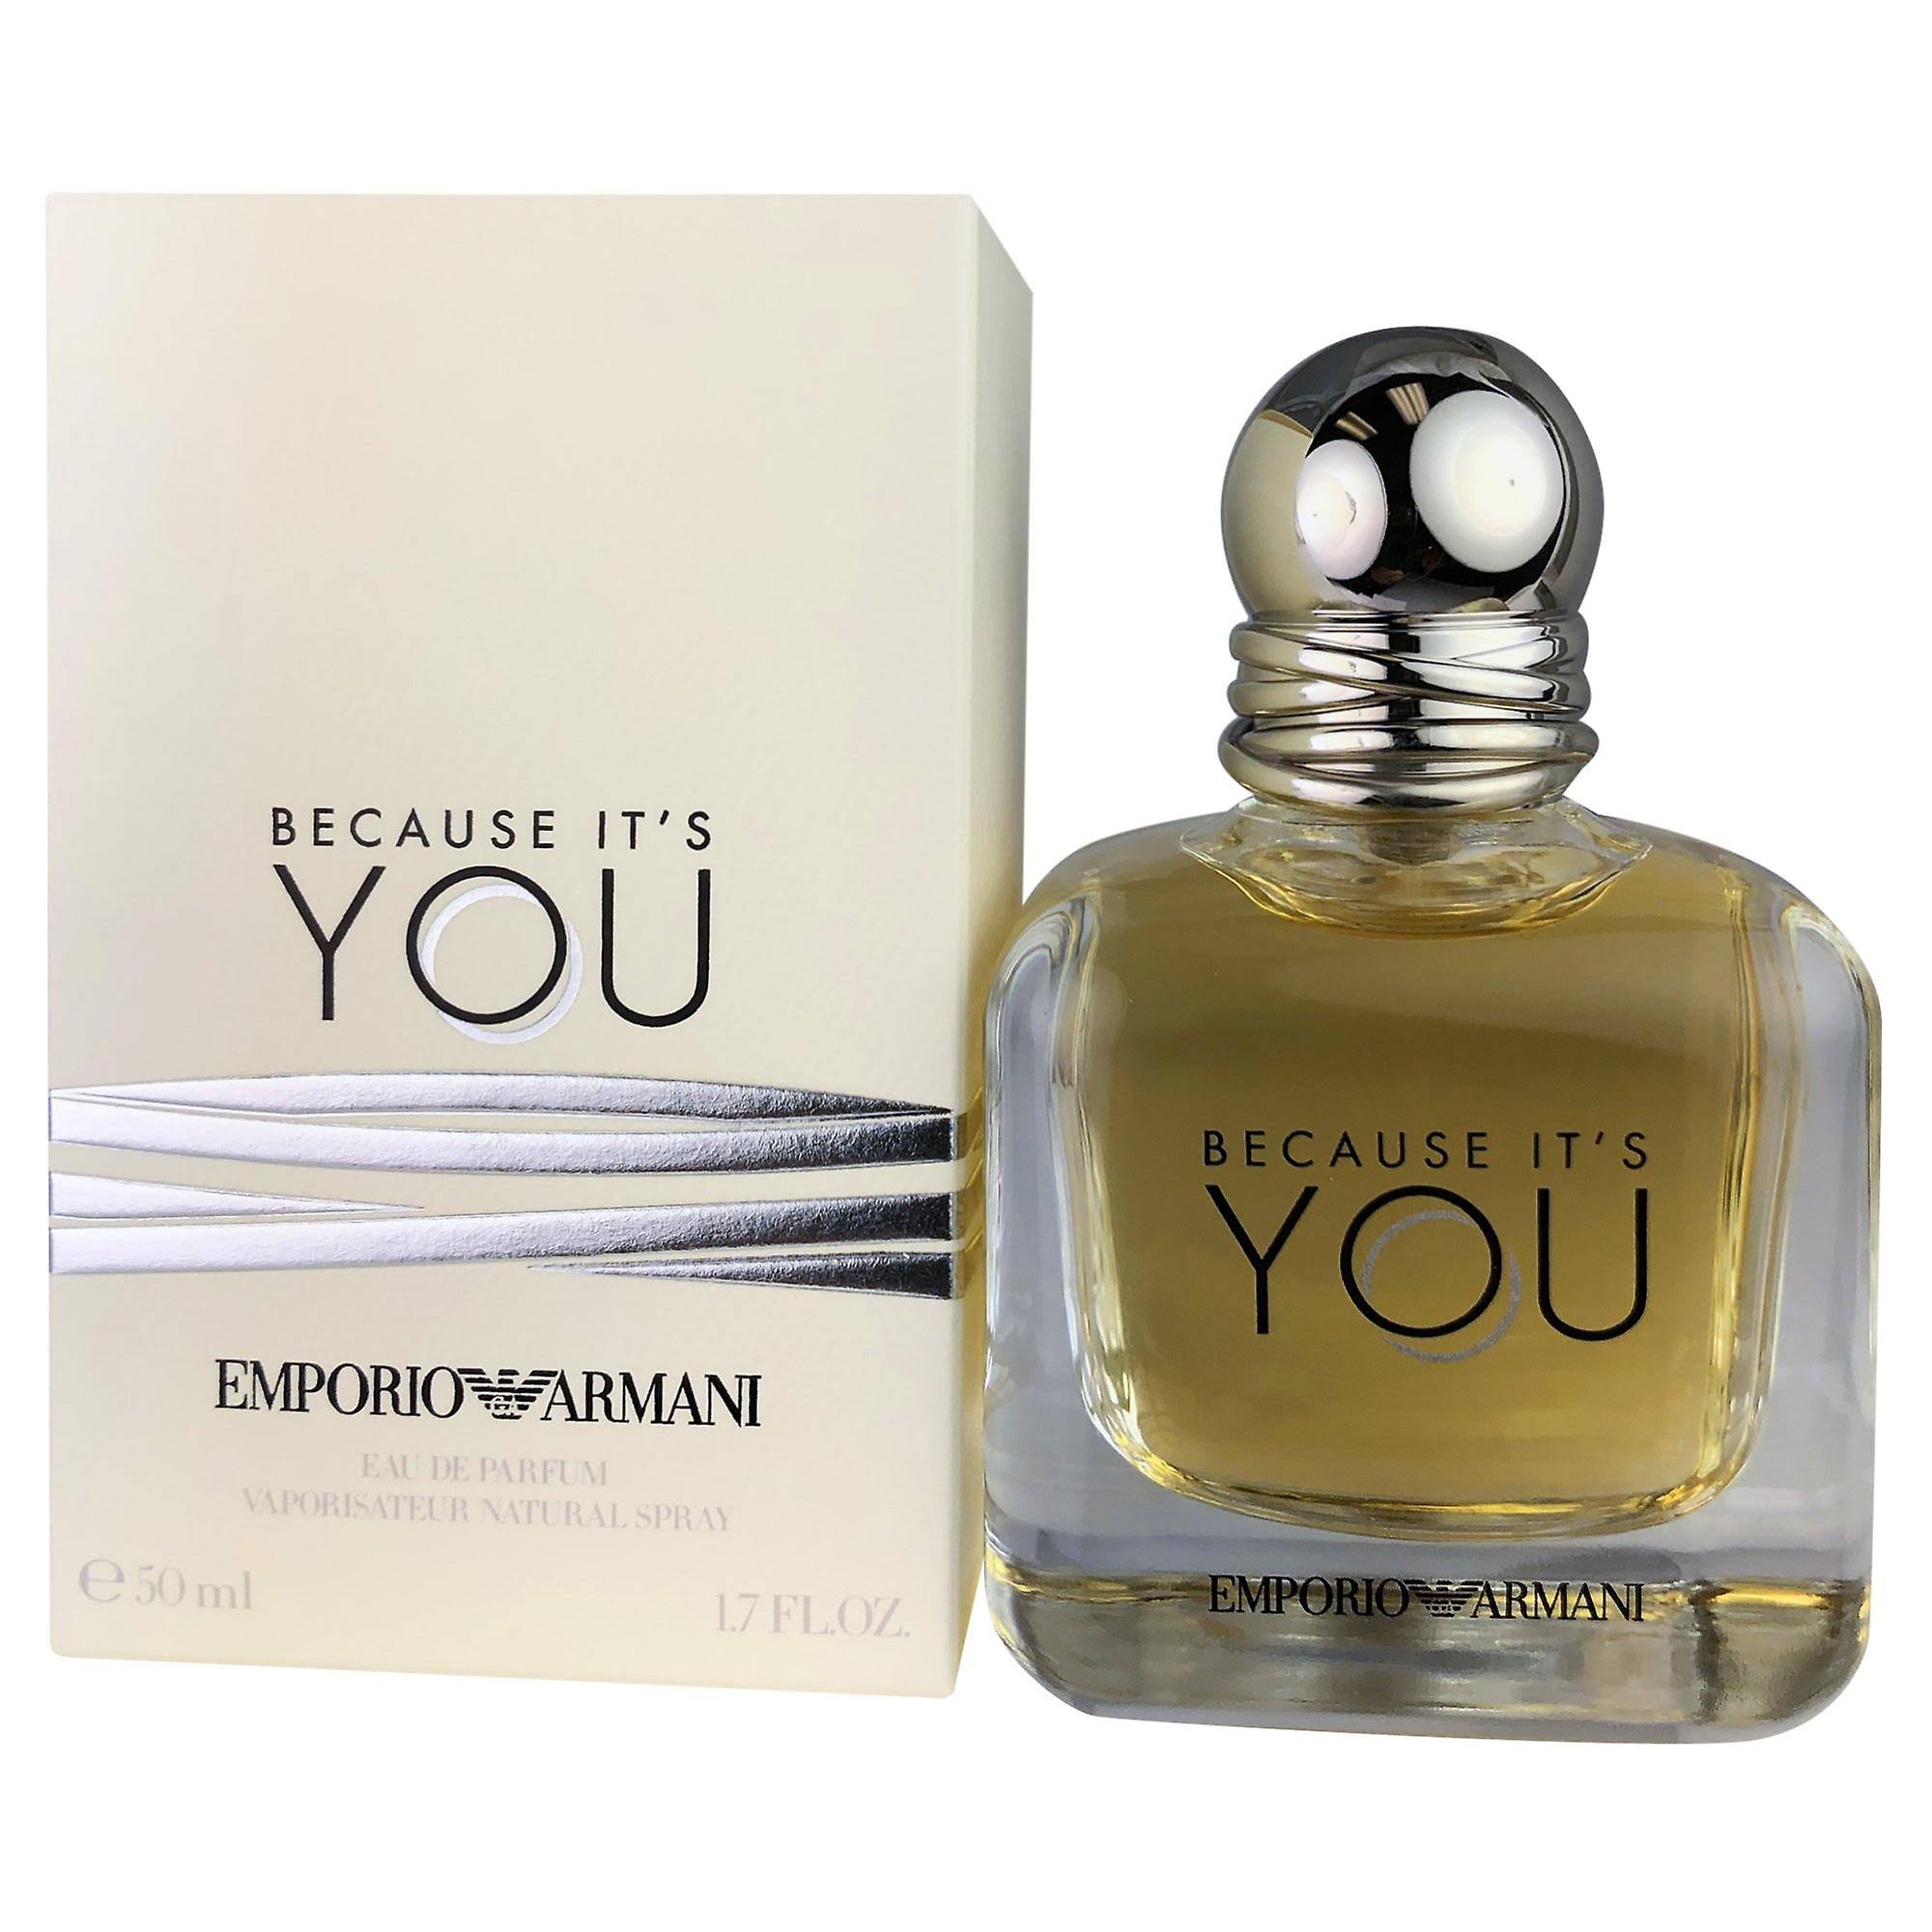 Emporio Armani Because It's You Eau de Parfum Spray - 50ml